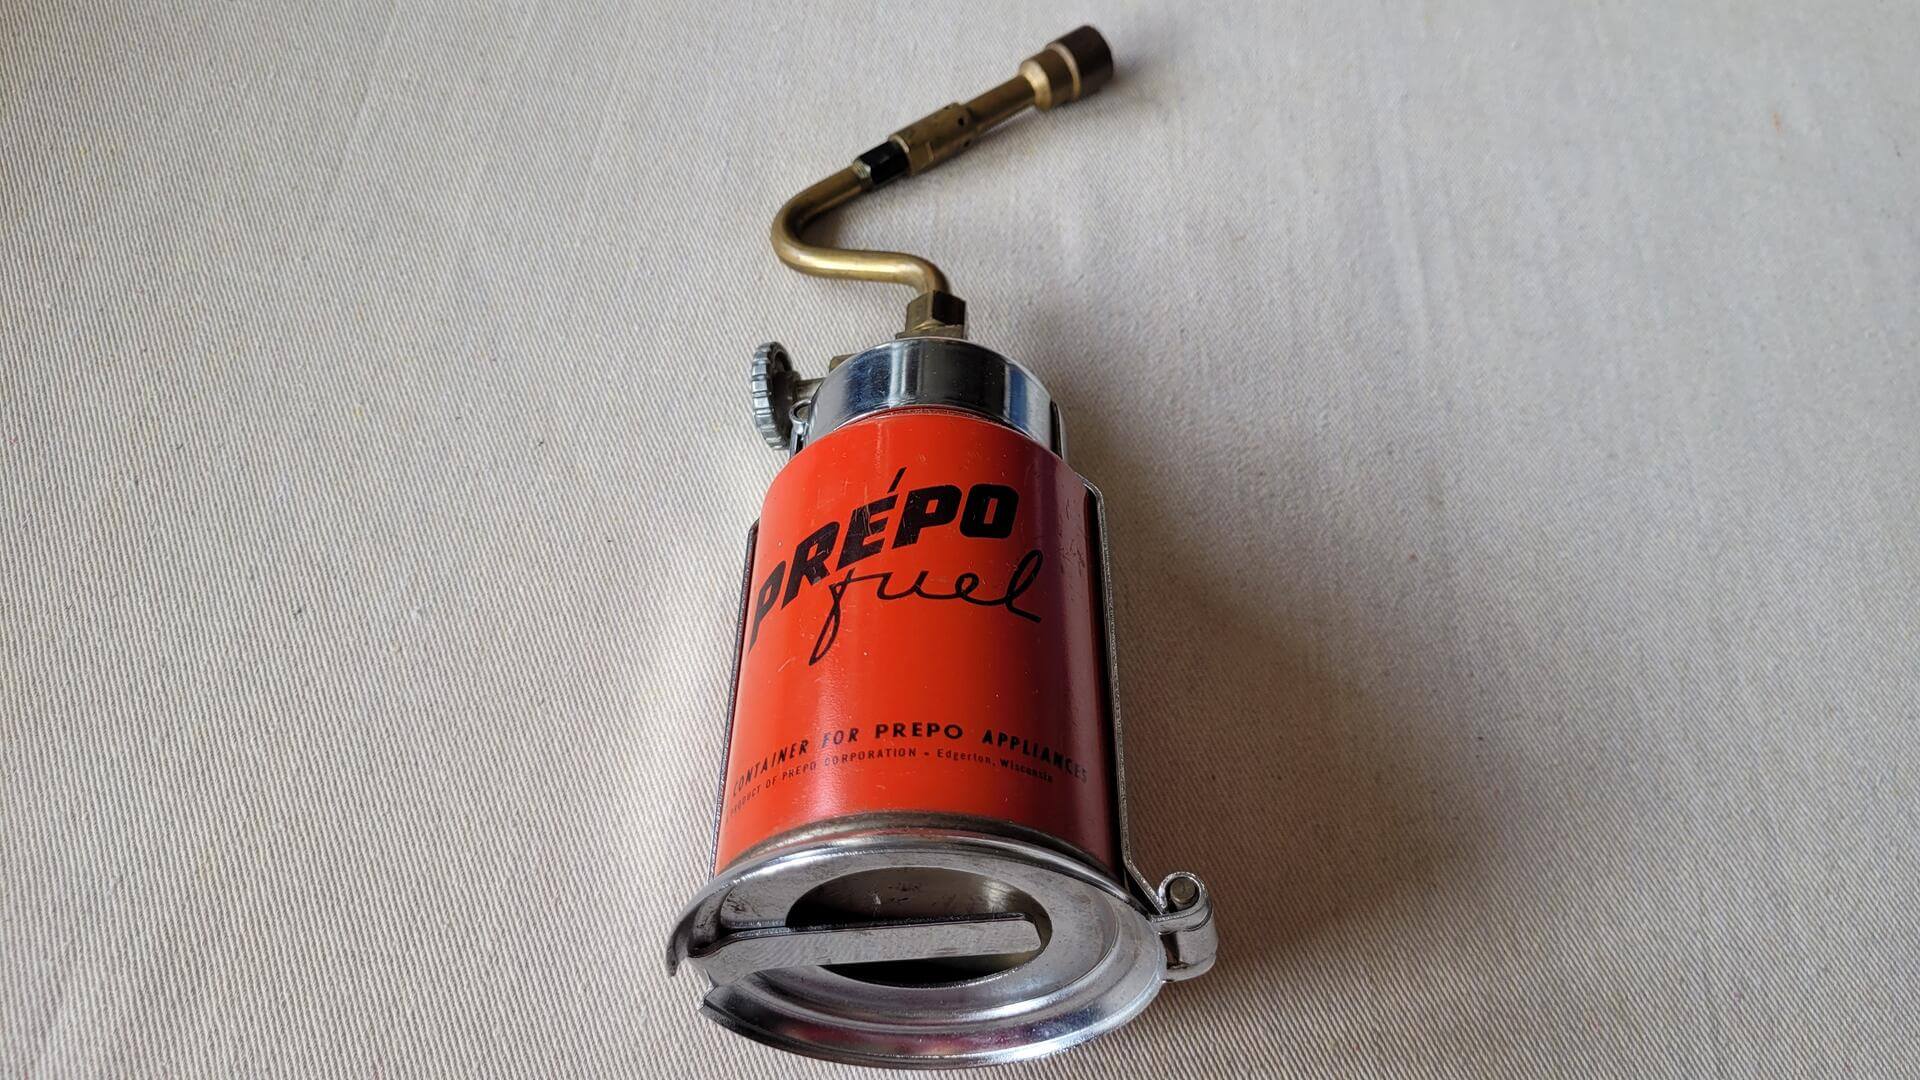 prepo-corporation-brass-blowtorch-orange-prepo-feul-canister-antique-vintage-made-in-usa-blow-torch-soldering-tool-1940s-memorabilia